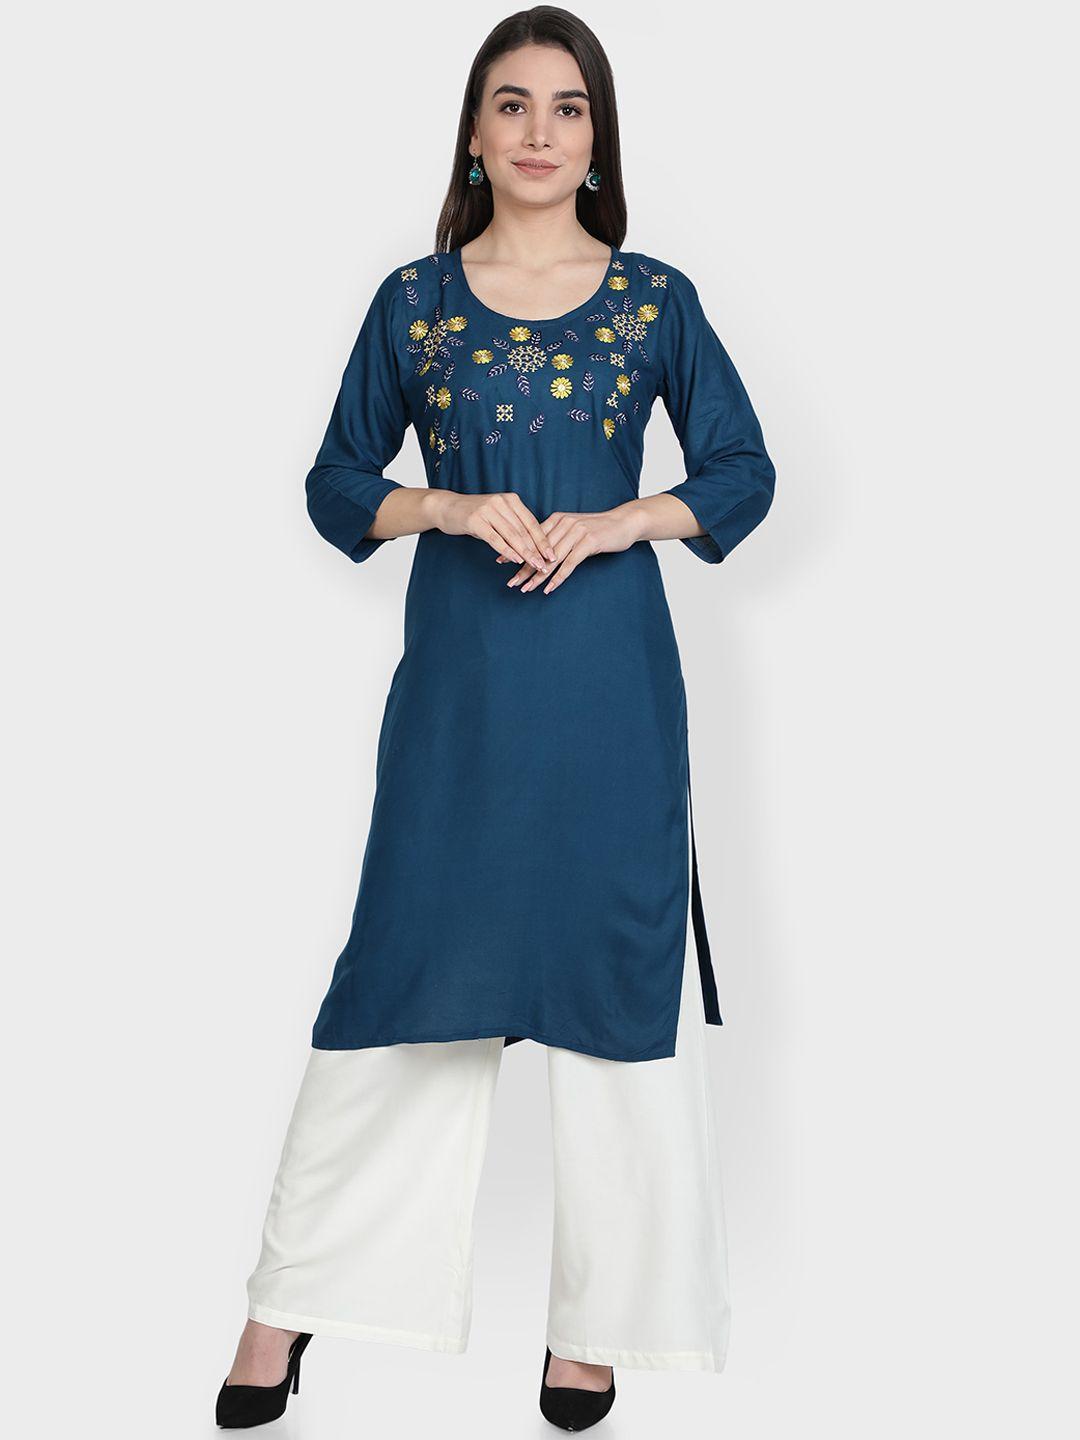 fabclub-women-teal-blue-ethnic-motifs-embroidered-kurta